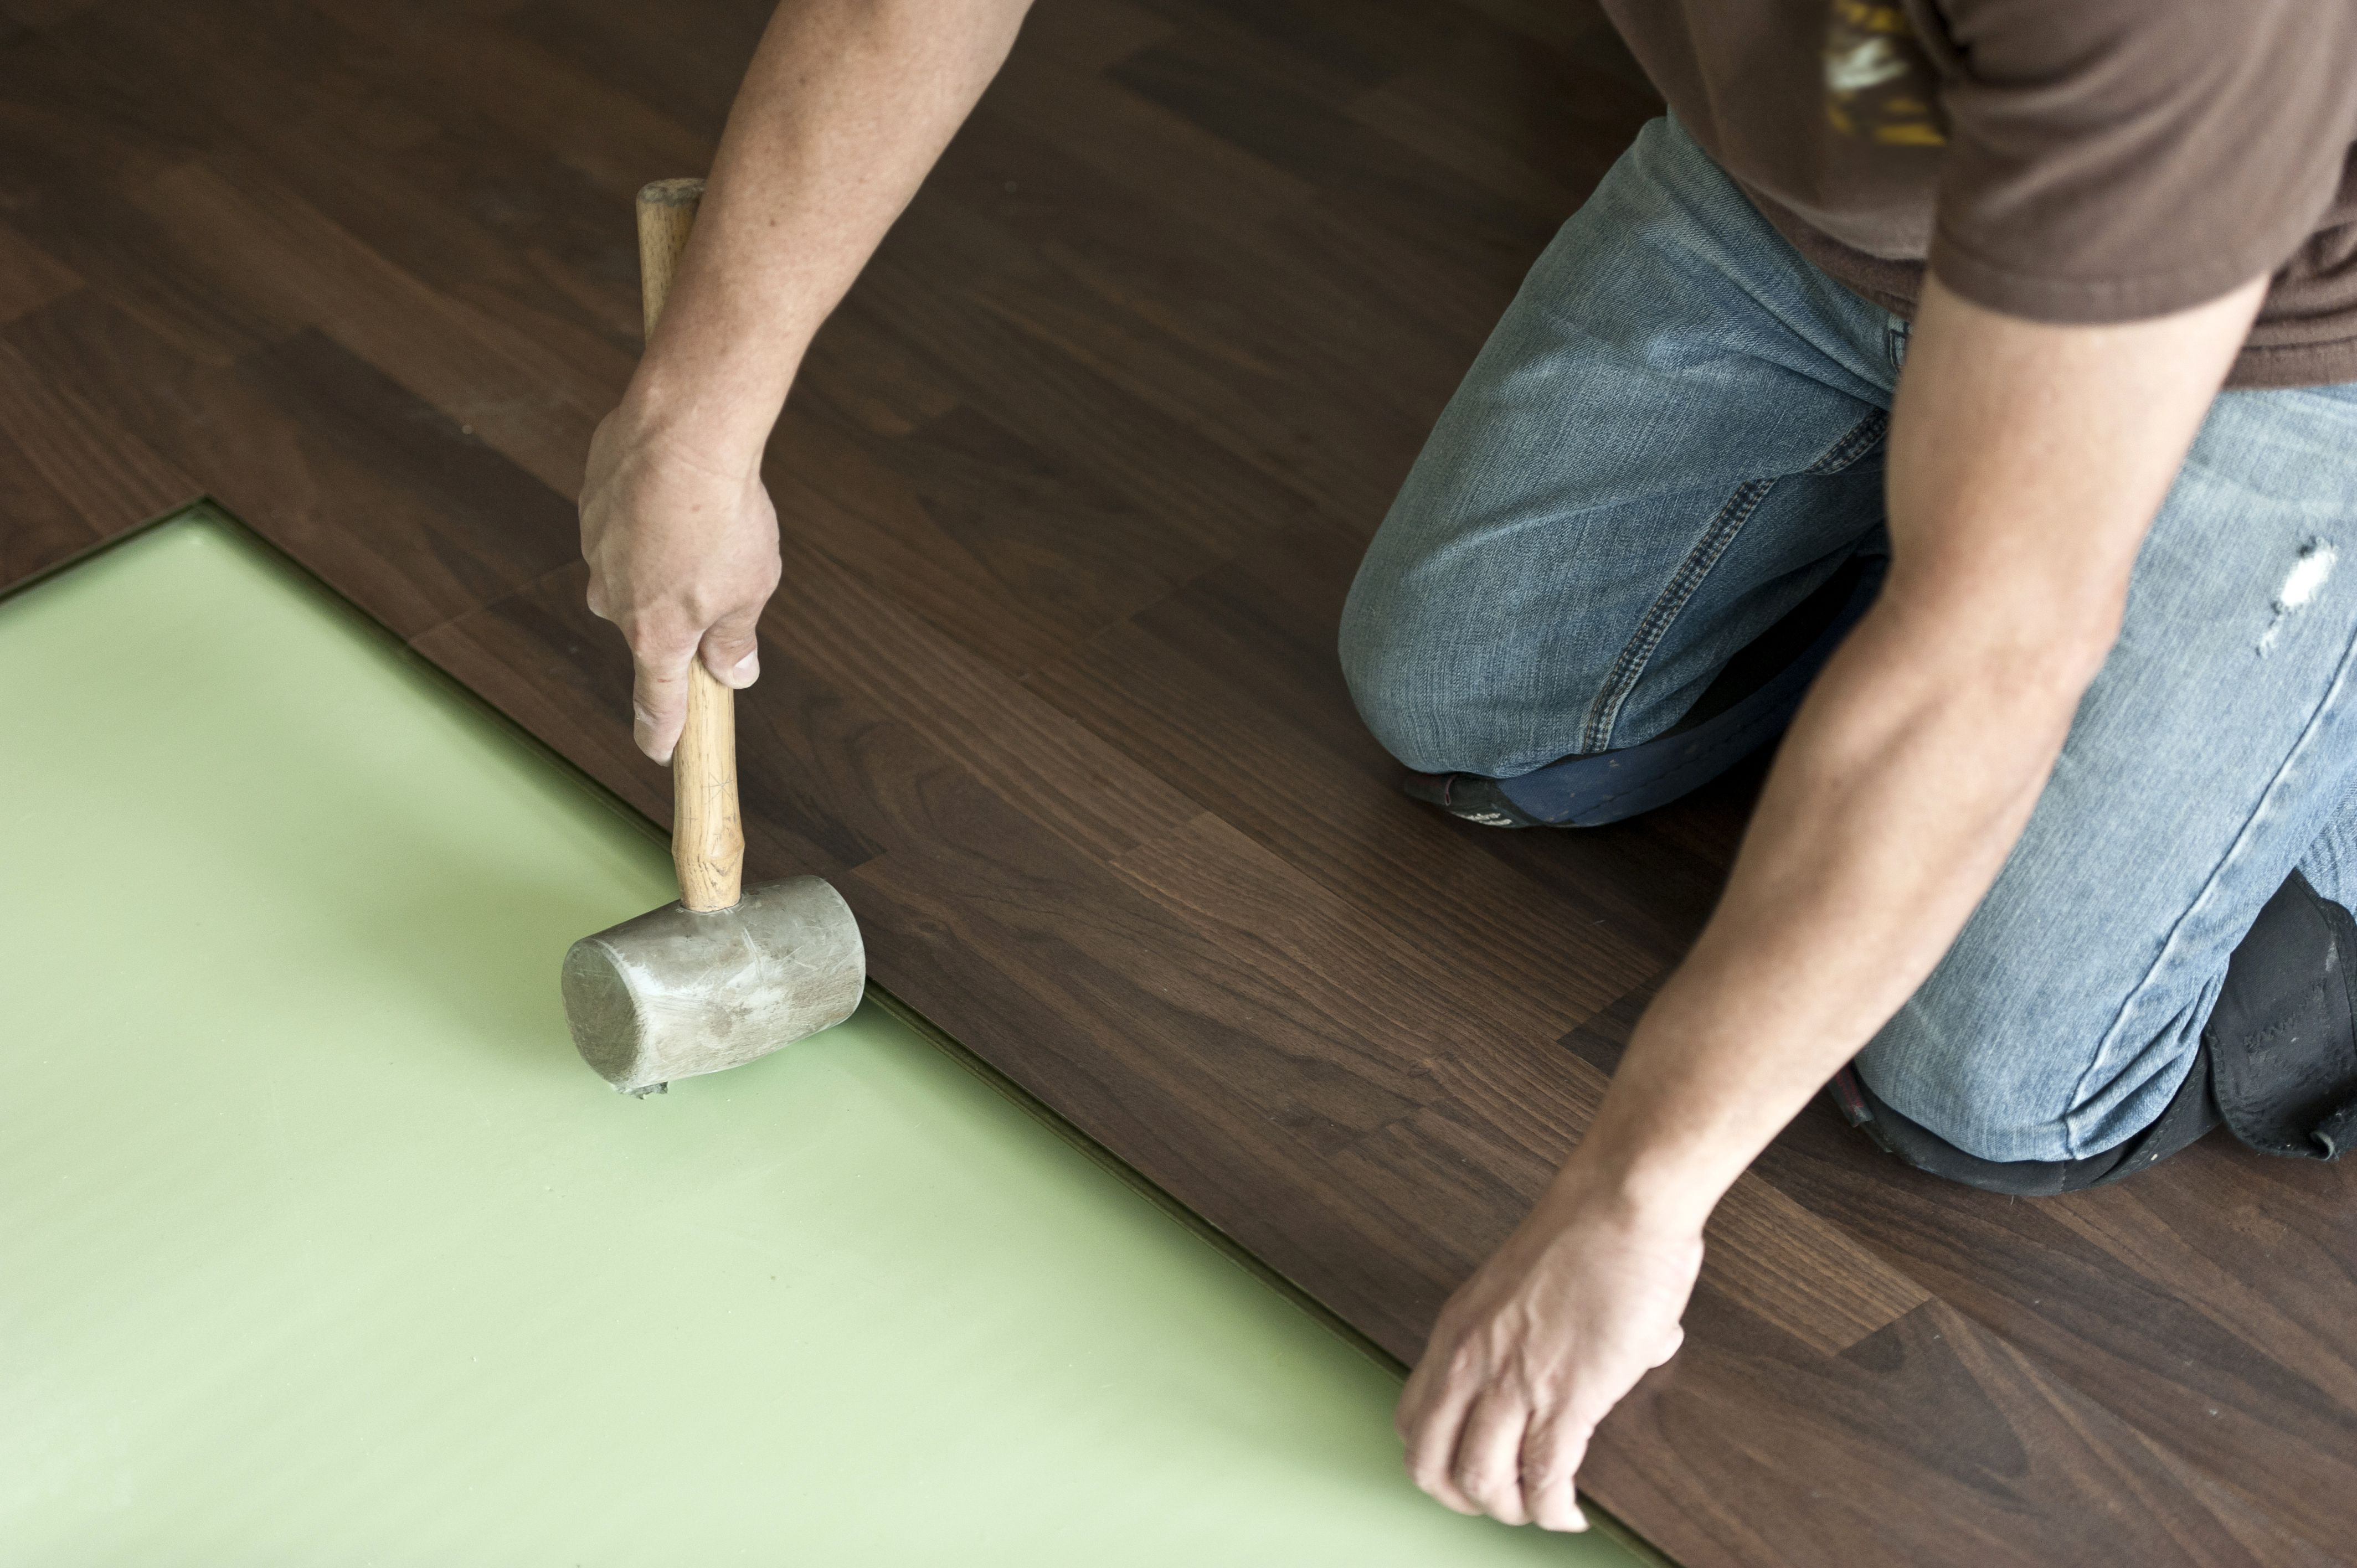 prefinished hardwood floor filler of can a foam pad be use under solid hardwood flooring intended for installing hardwood floor 155149312 57e967d45f9b586c35ade84a